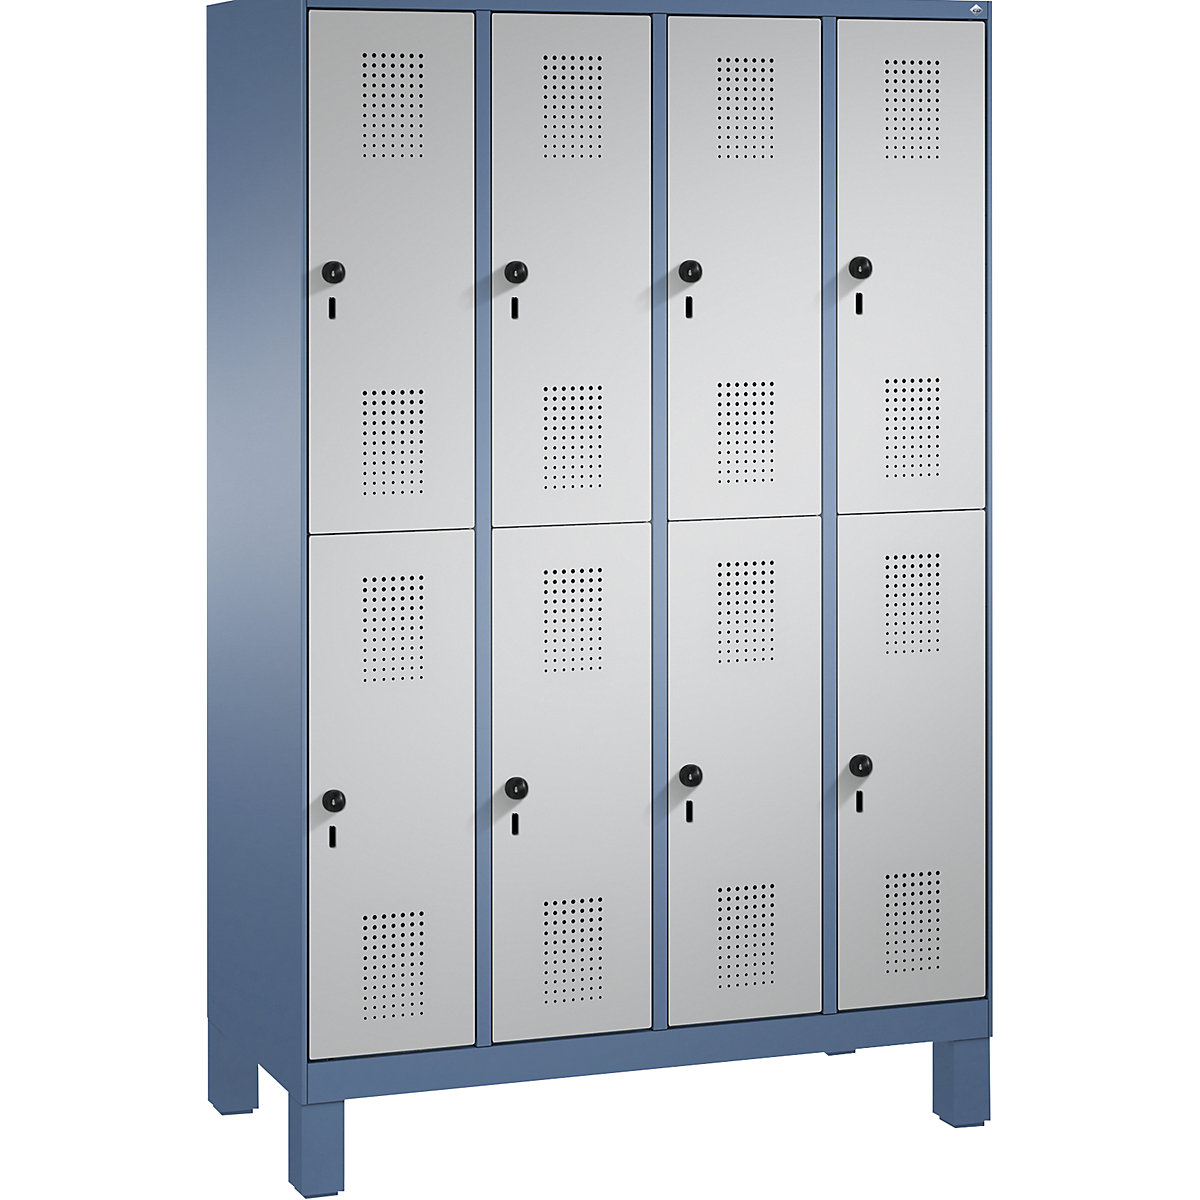 EVOLO cloakroom locker, double tier, with feet - C+P